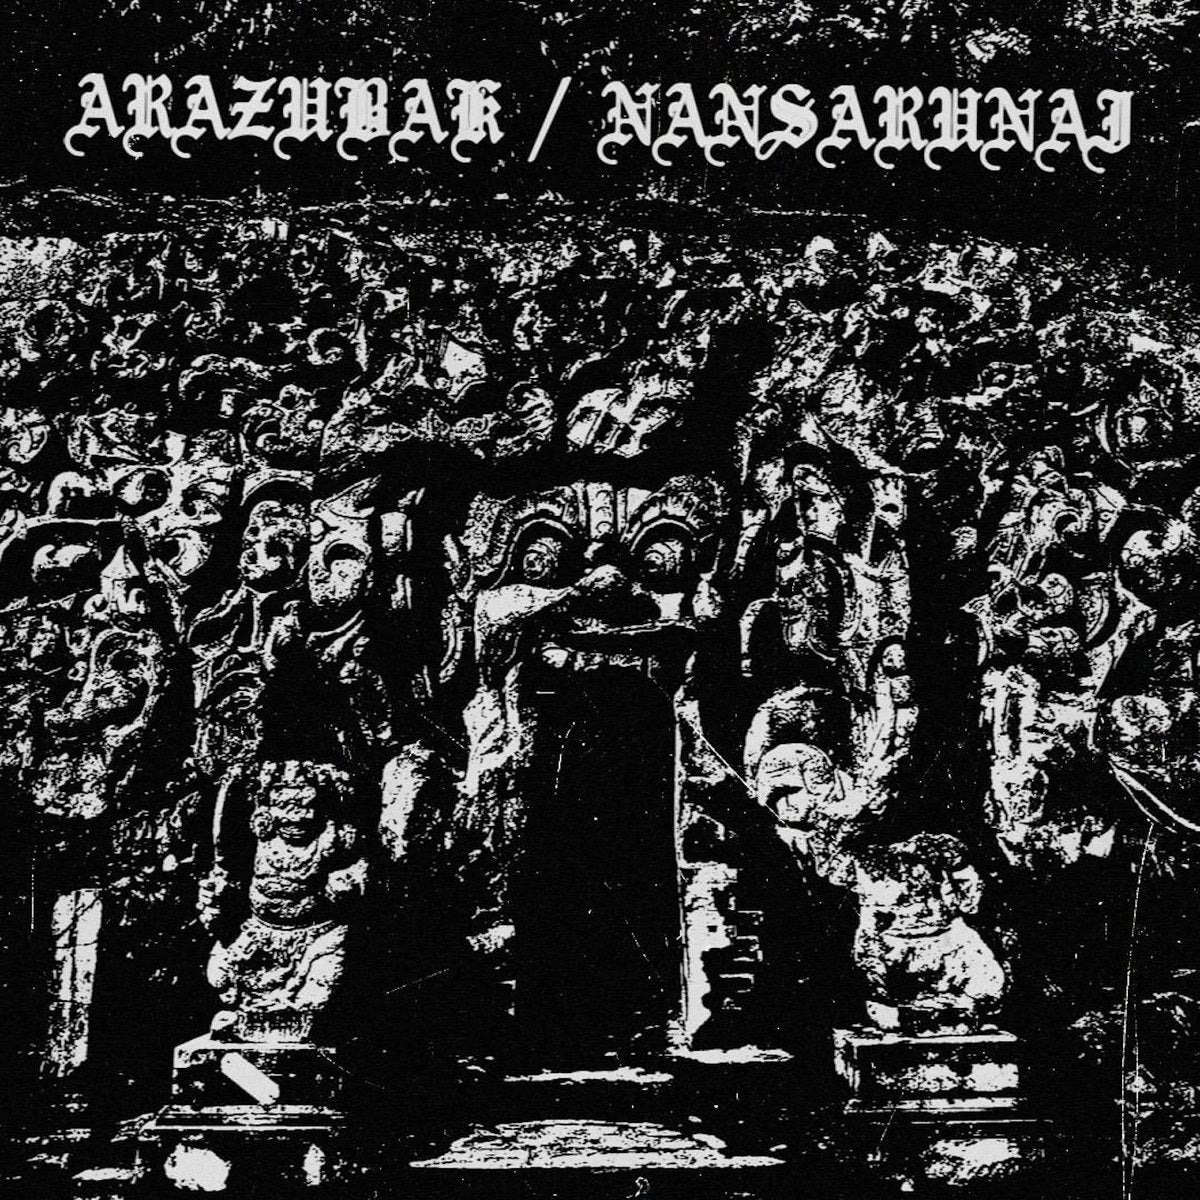 [SOLD OUT] ARAZUBAK / NANSARUNAI "Split" CD (digipak)